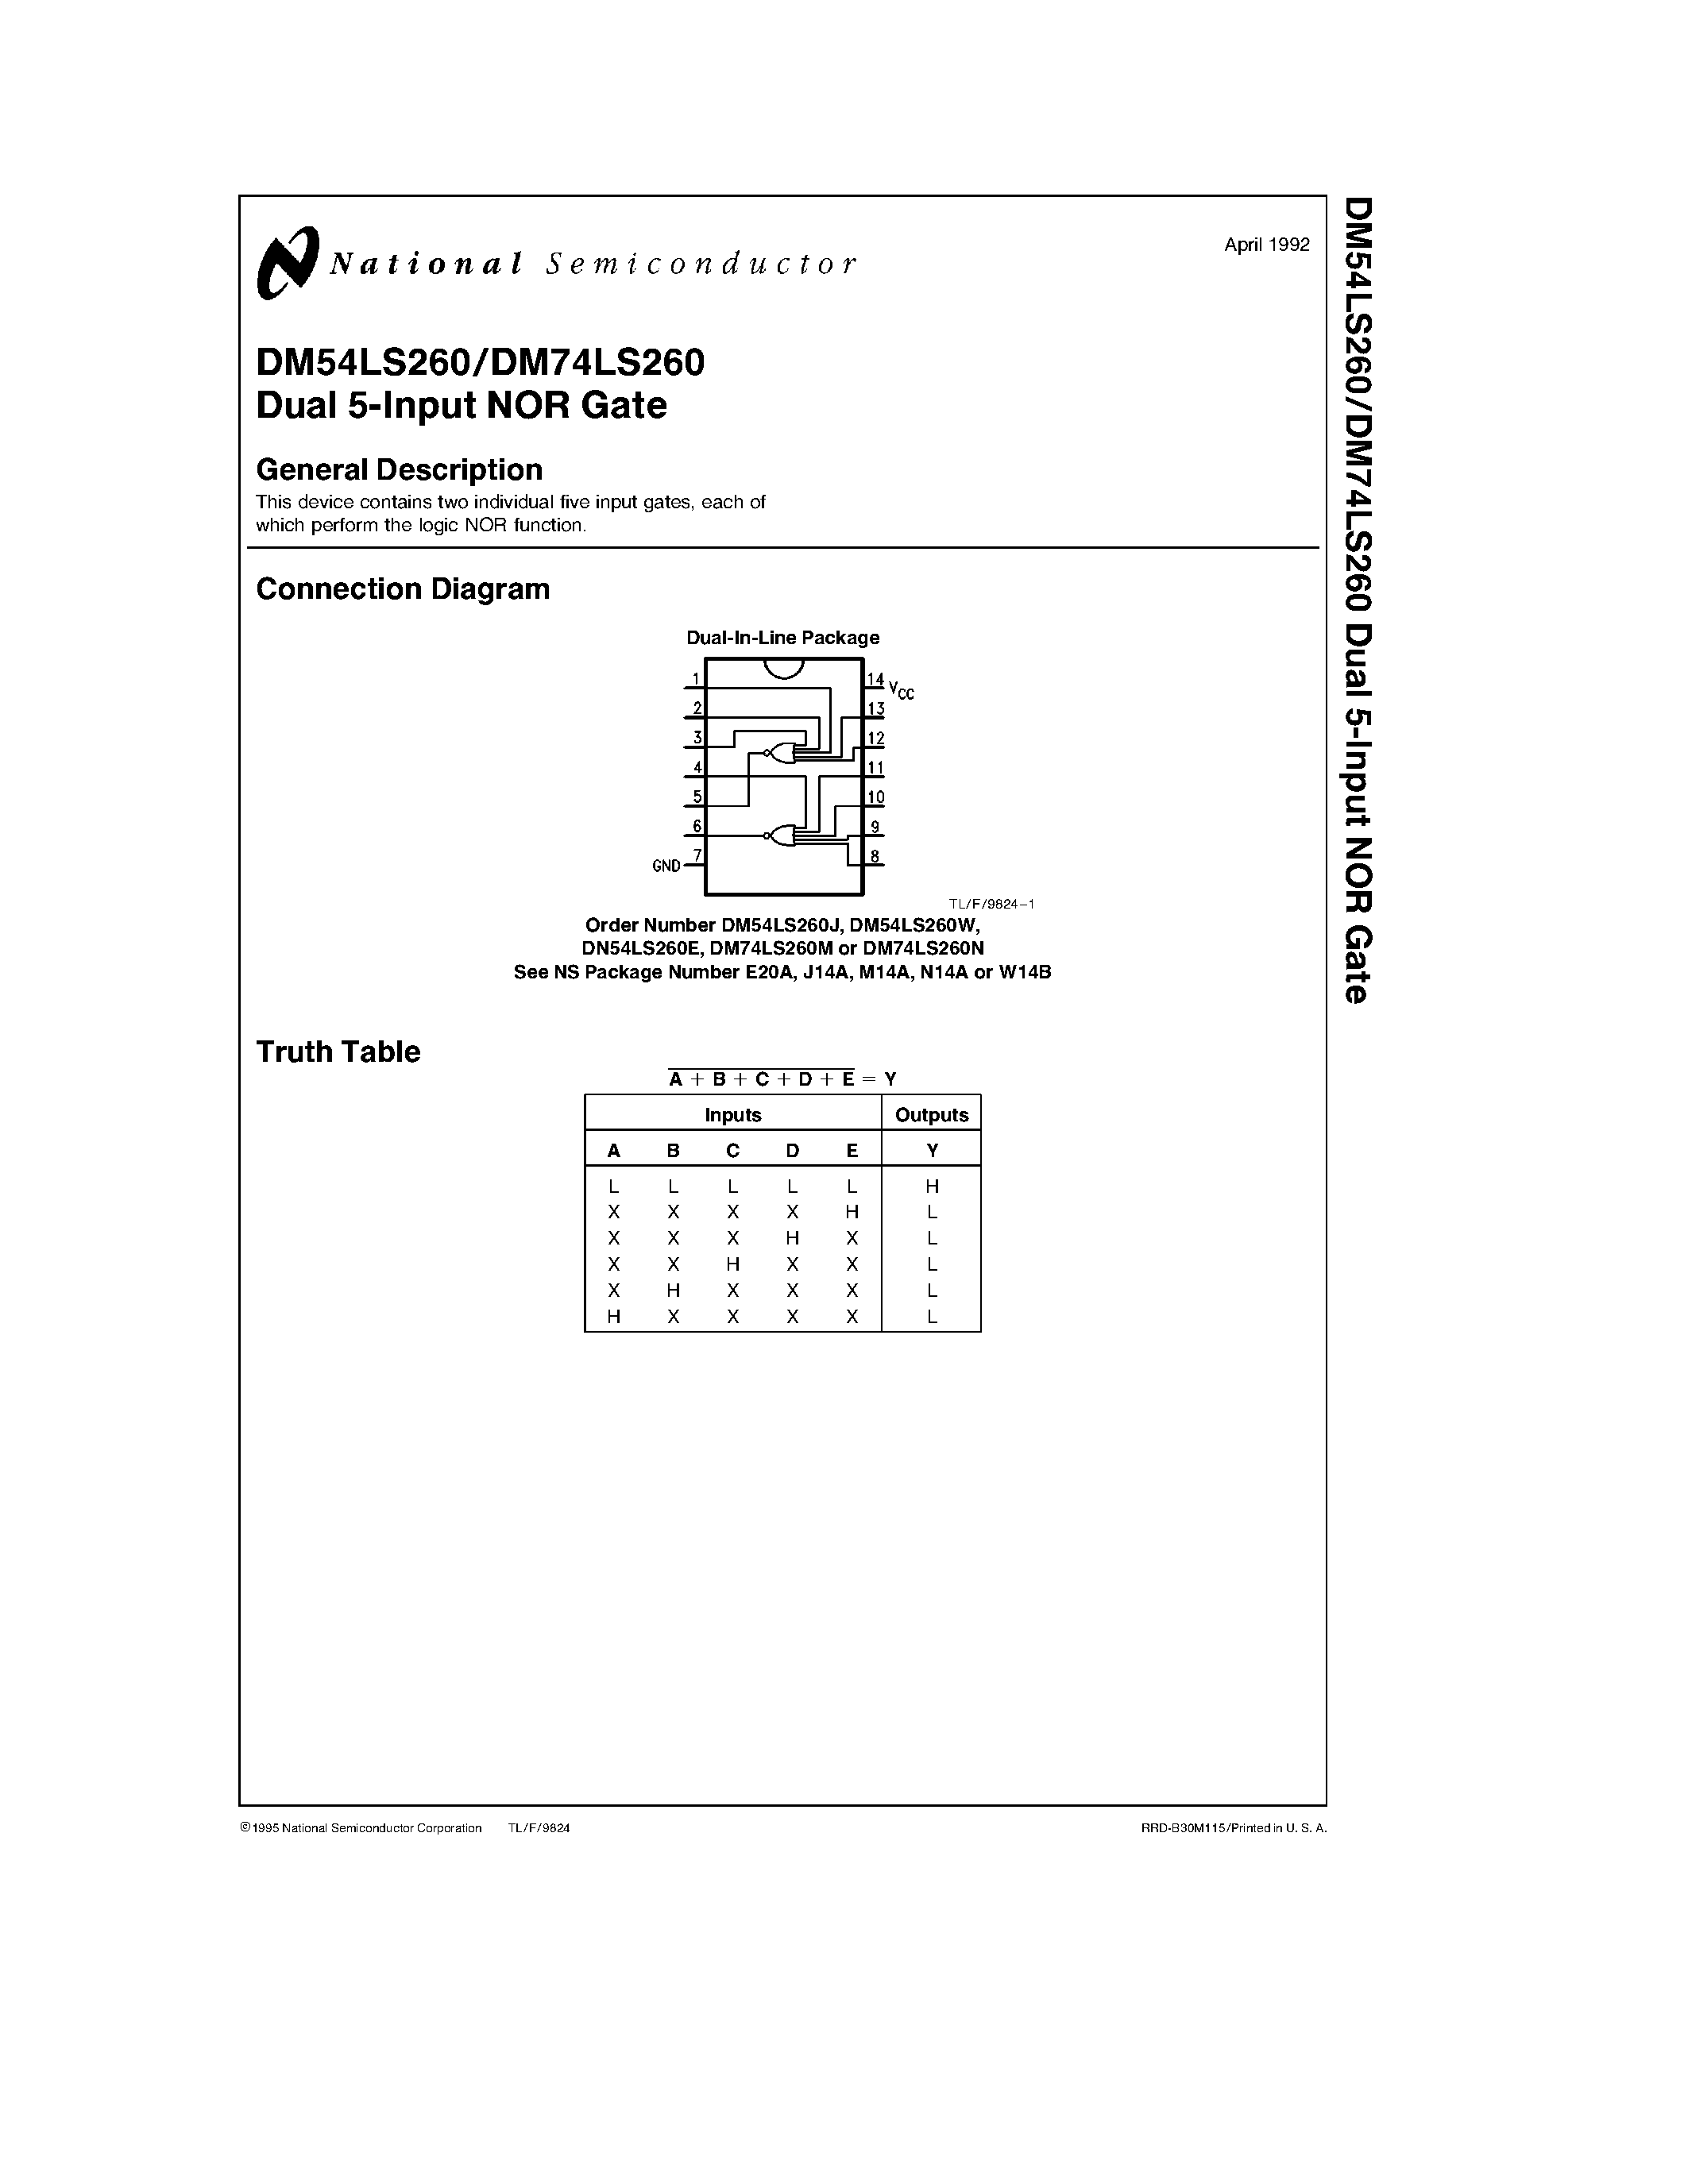 Datasheet 74260 - Dual 5-Input NOR Gate page 1